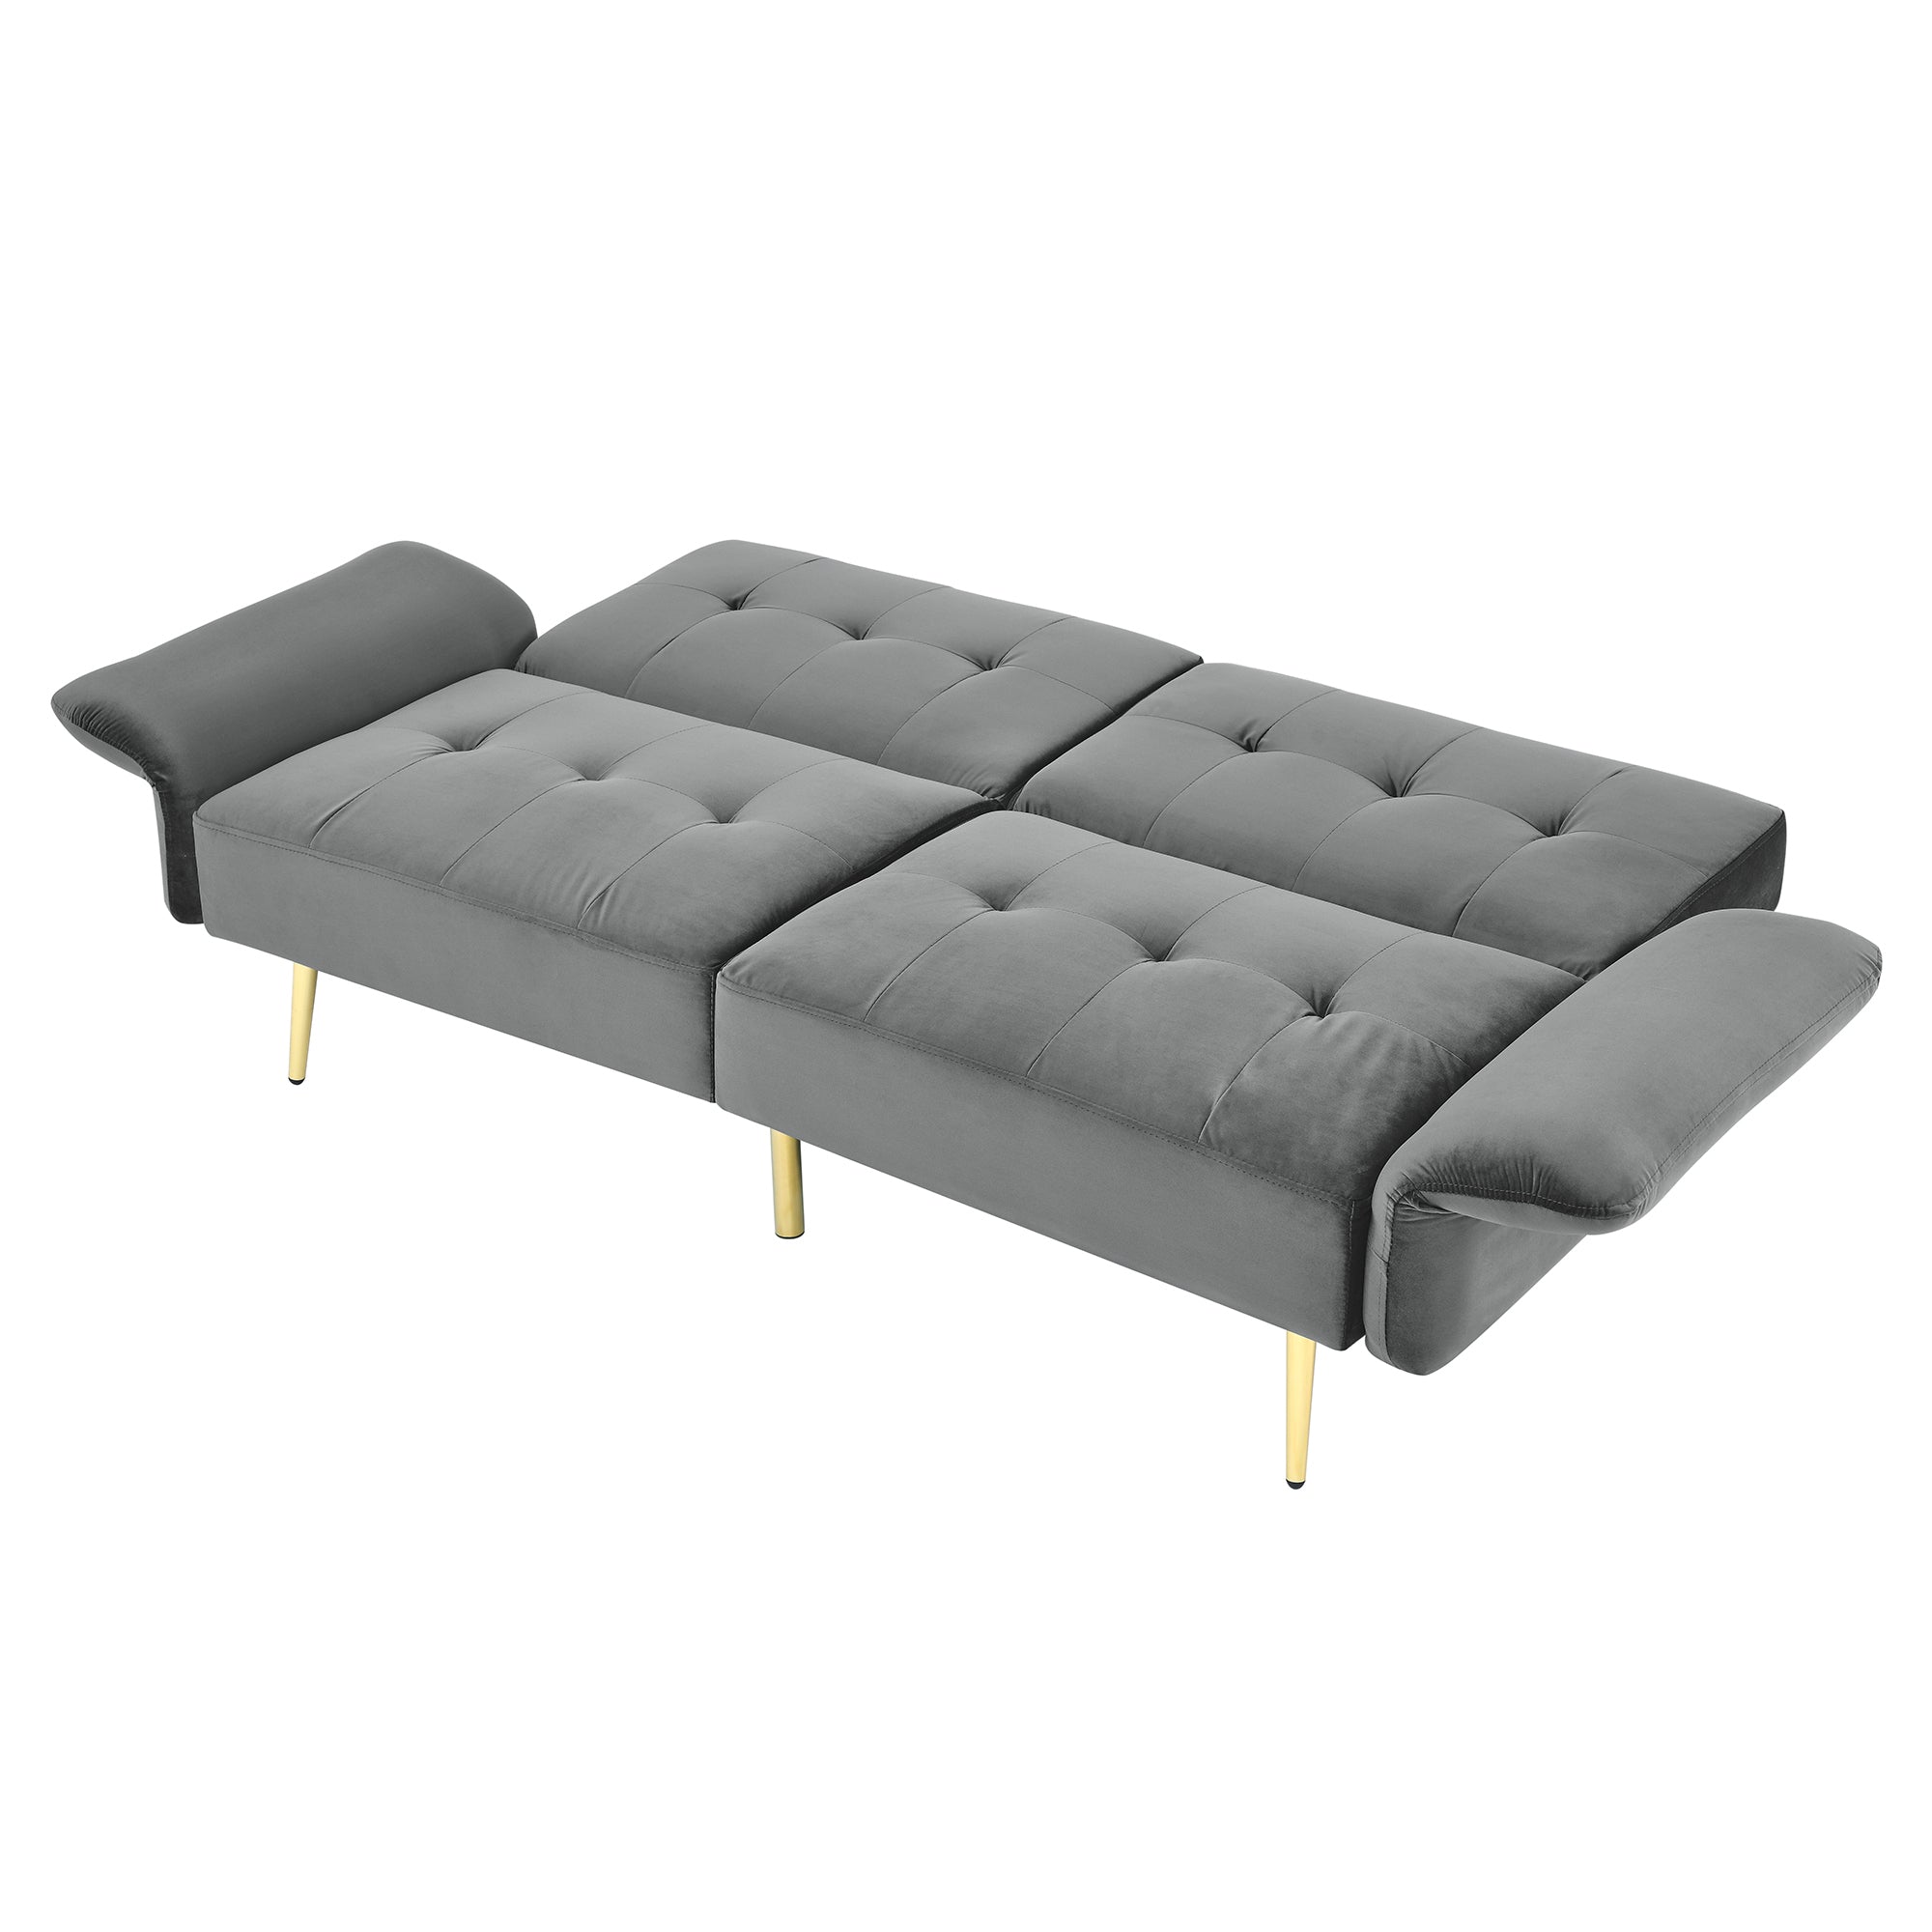 Italian Velvet Futon Sofa Bed, Convertible Sleeper Loveseat, Armrests, Storage Bags, Green Grey